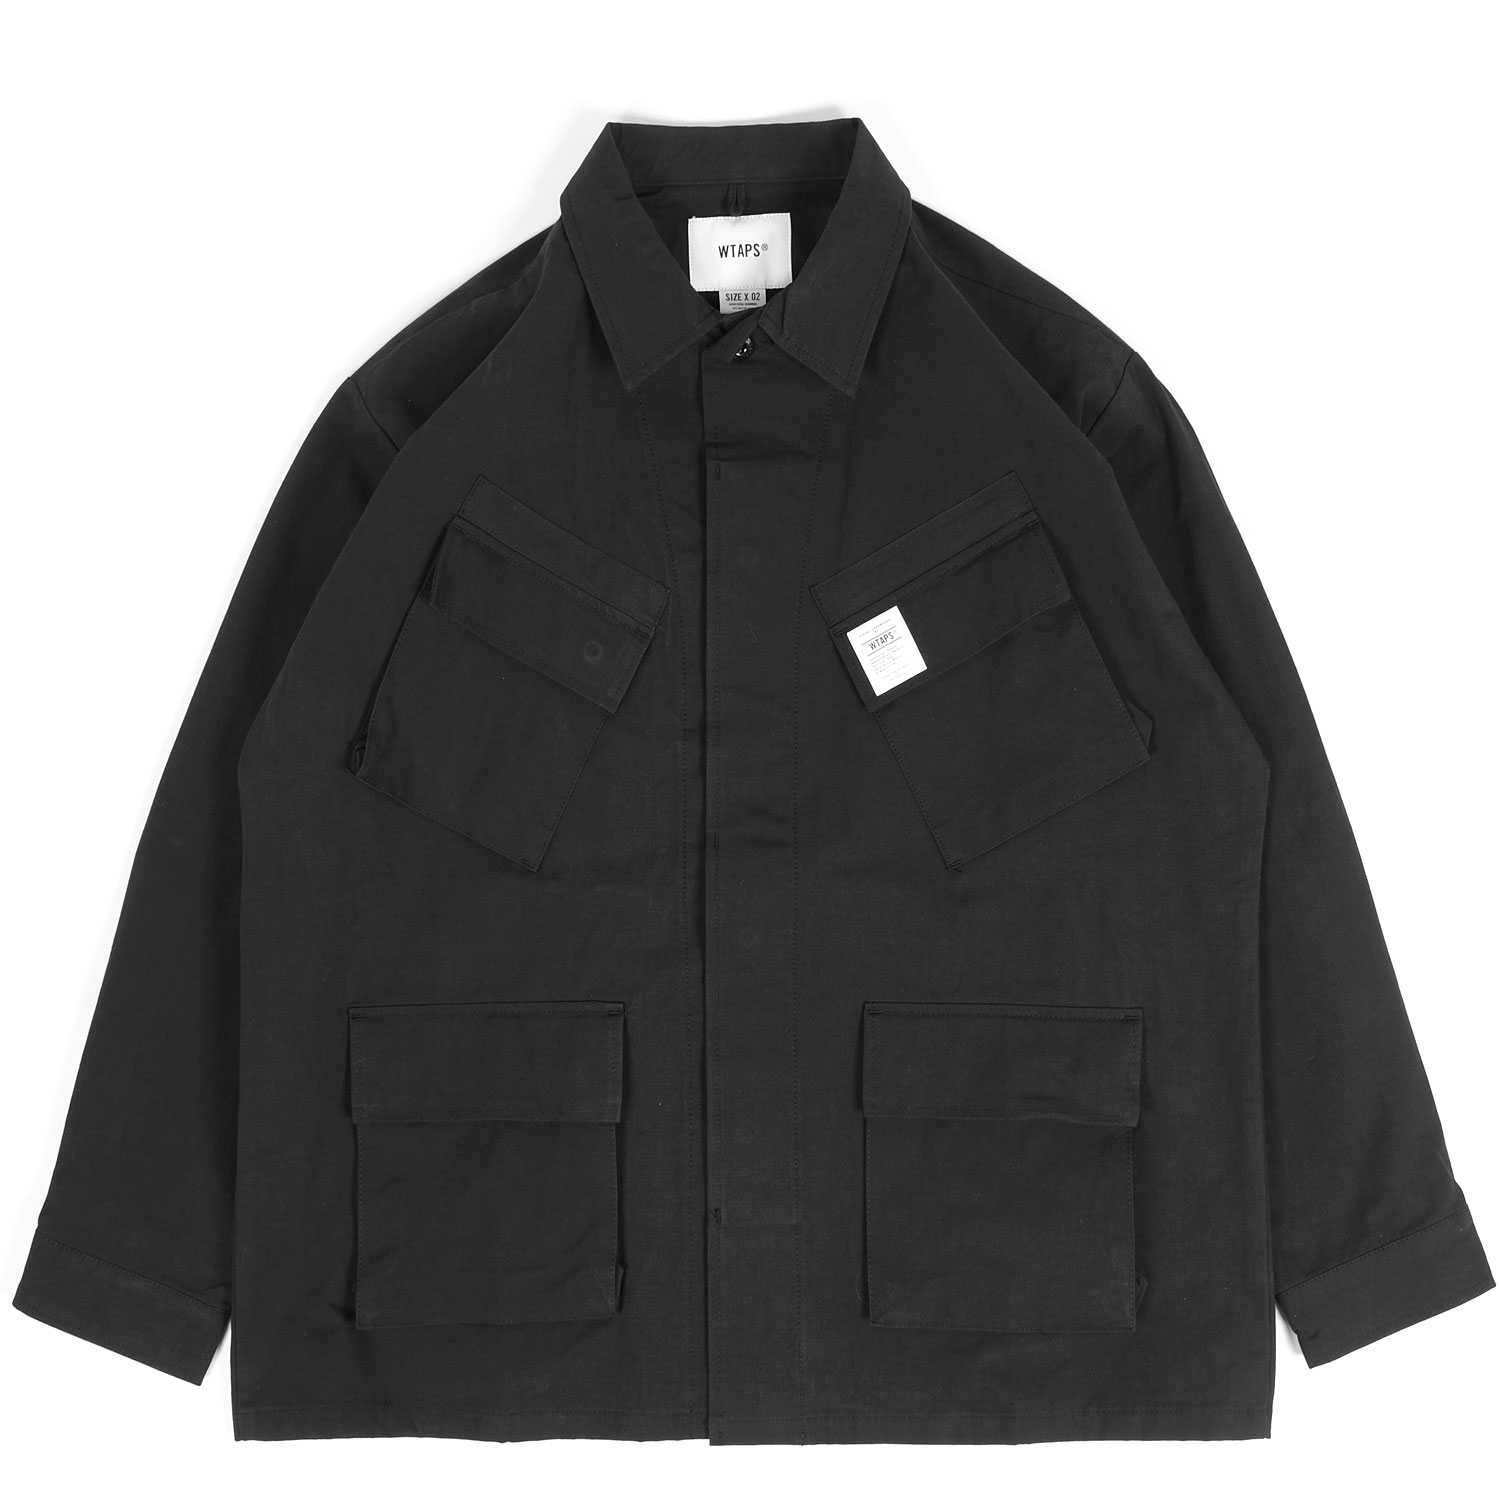 Wtaps shirts black size 02